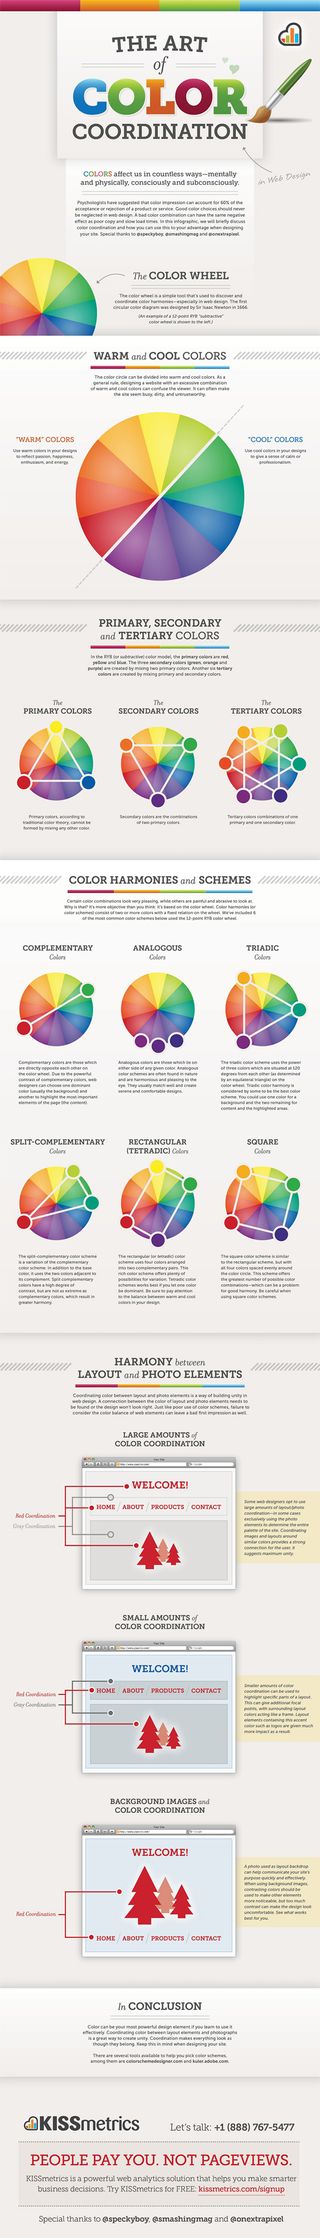 Colour coordination infographic